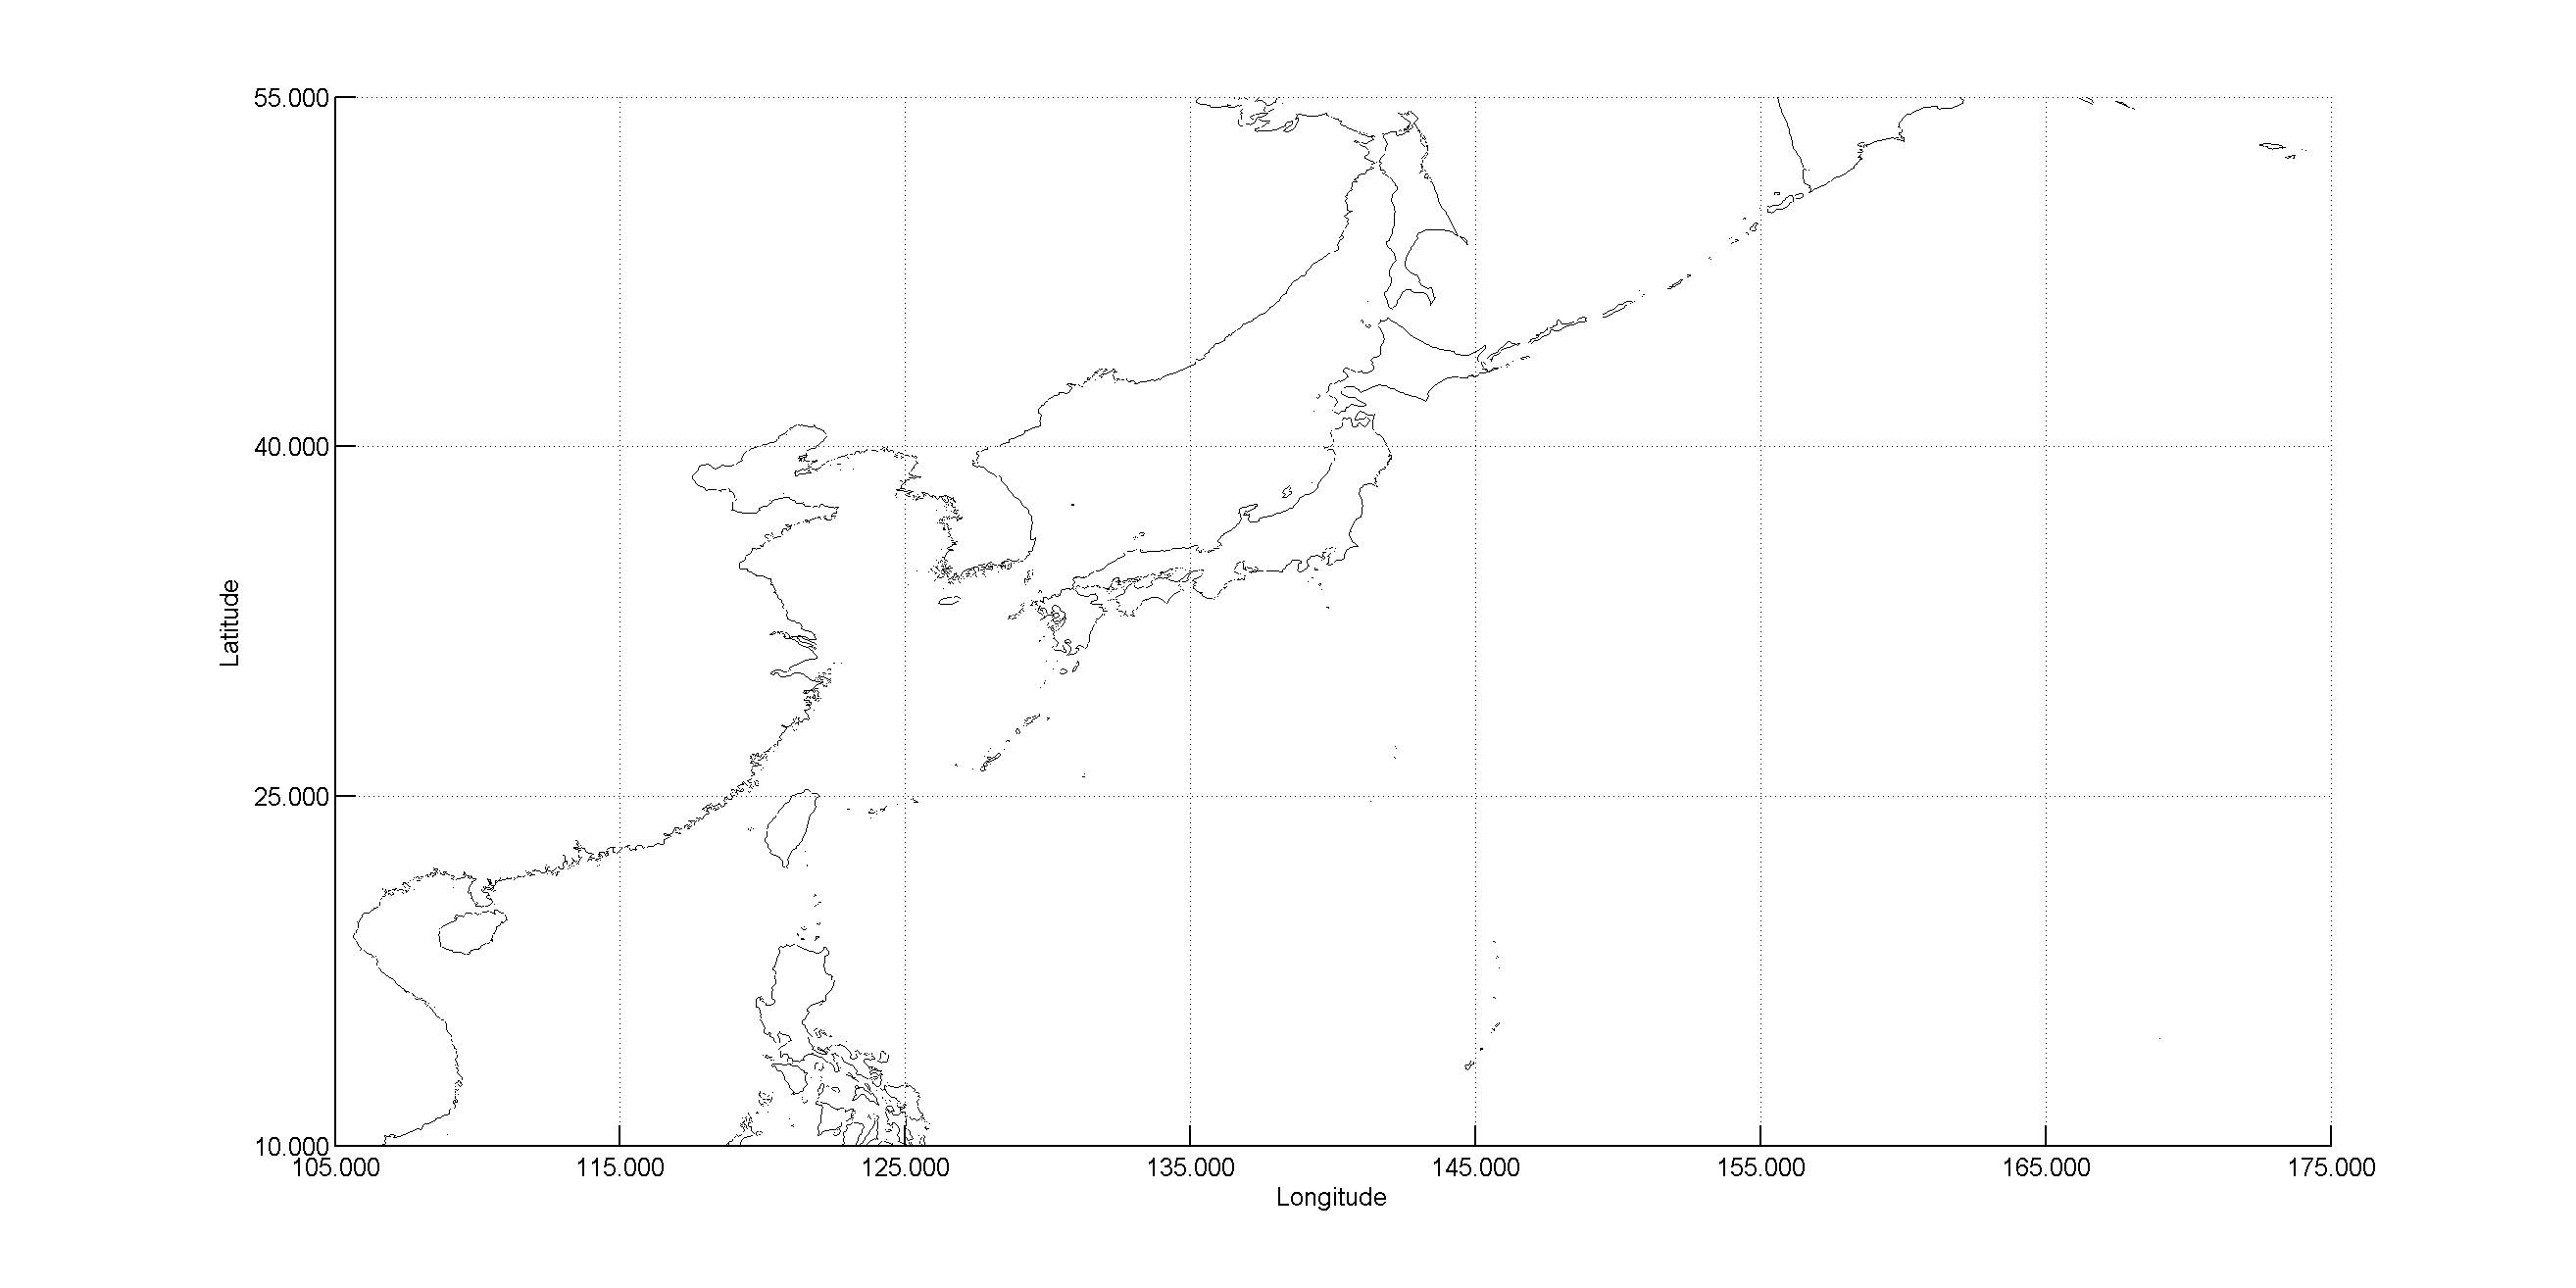 CYCLE_194 - Japan Ascending passes